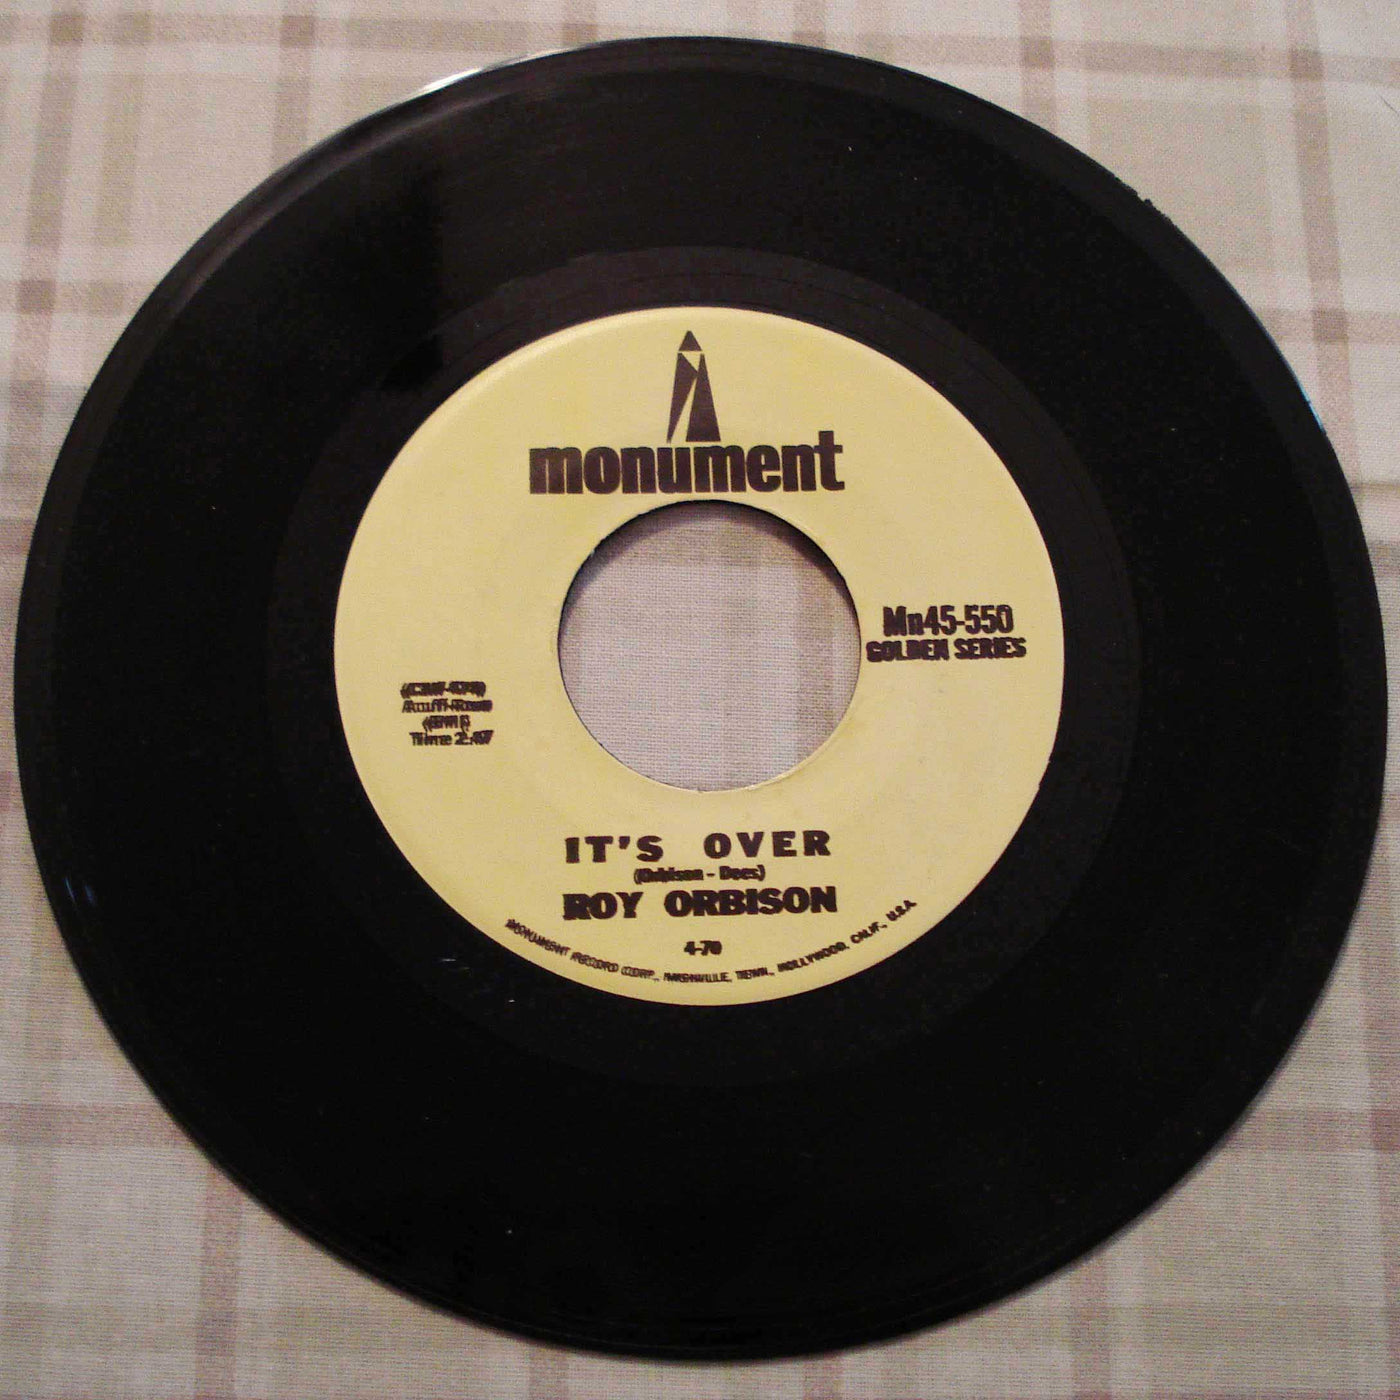 Roy Orbison - Oh Pretty Woman-It's Over (1964) Vinyl Single 45rpm Mn45-550